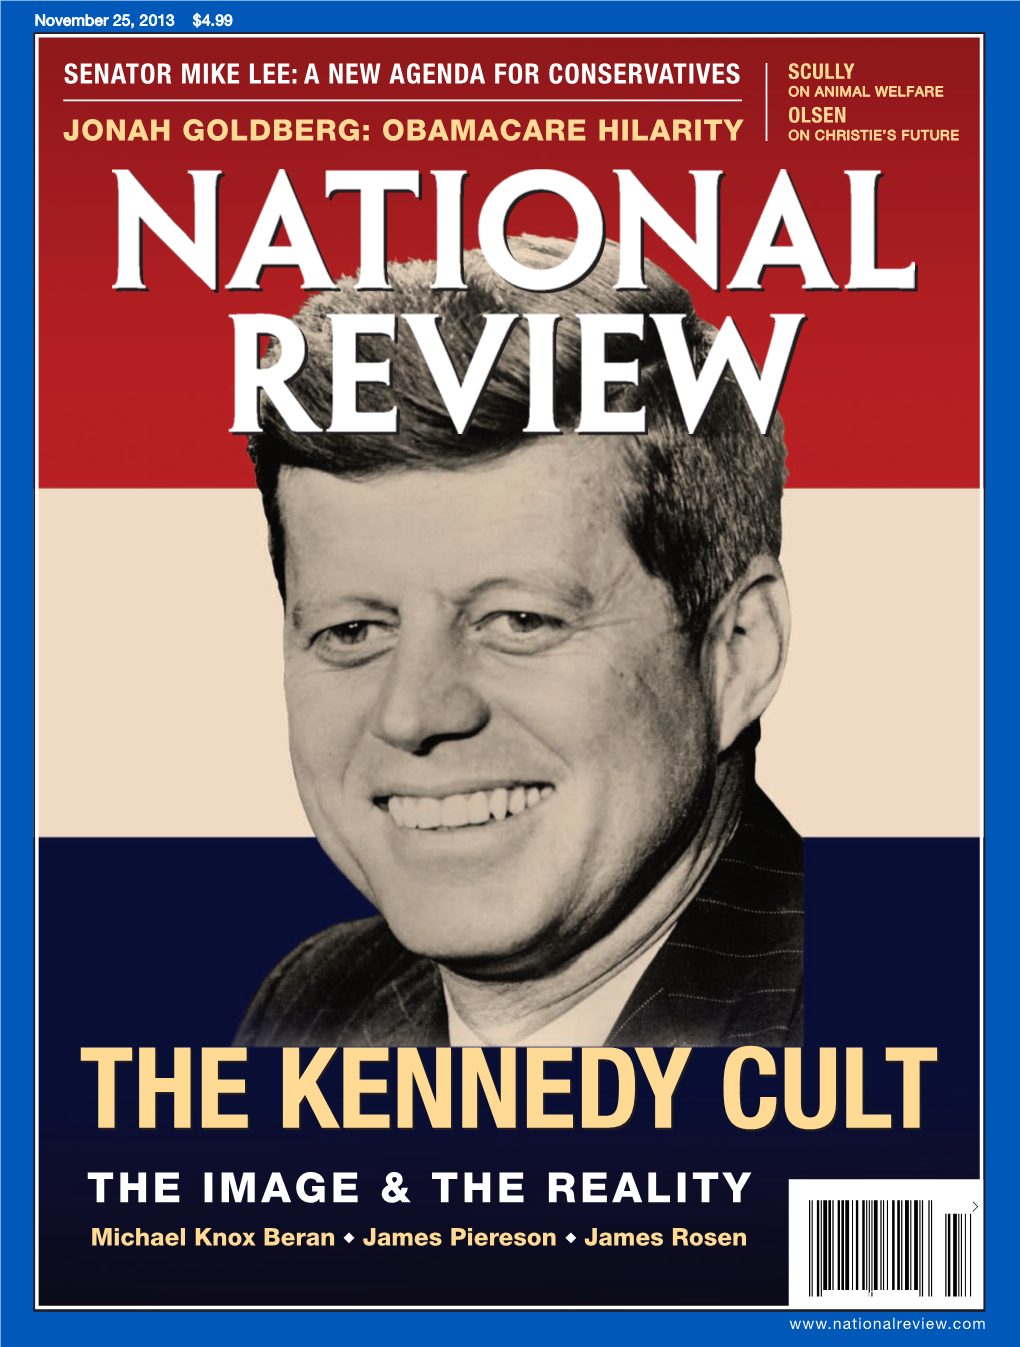 The Kennedy Cult